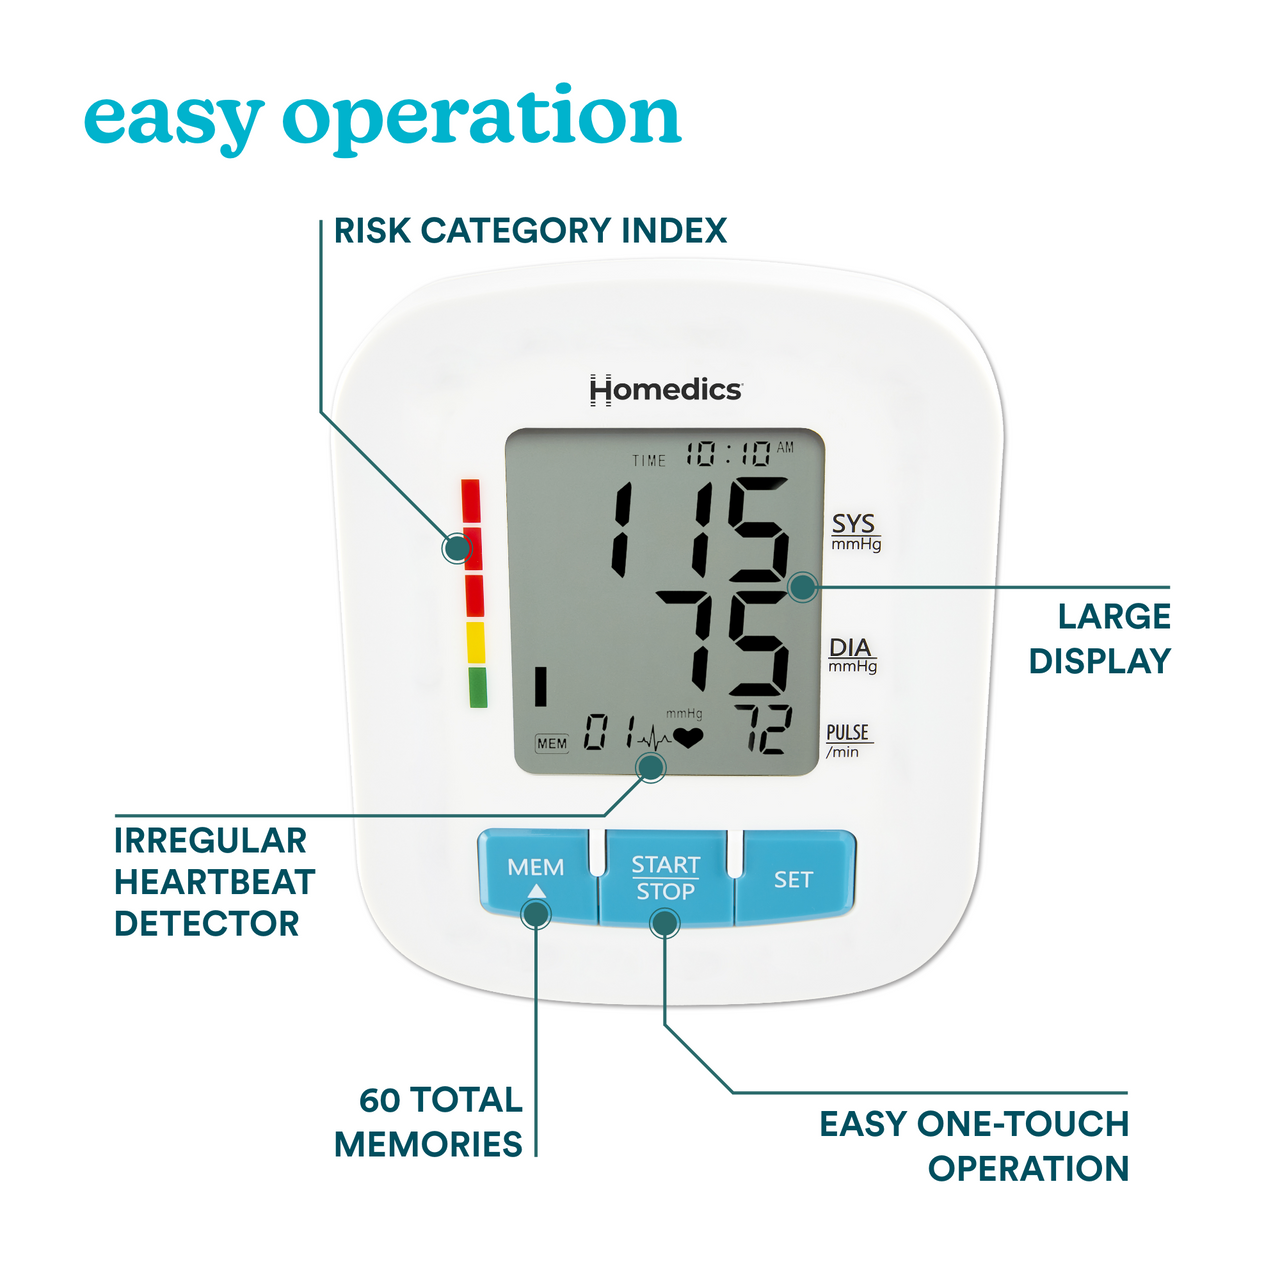 Live - Equate Blood Pressure Monitor